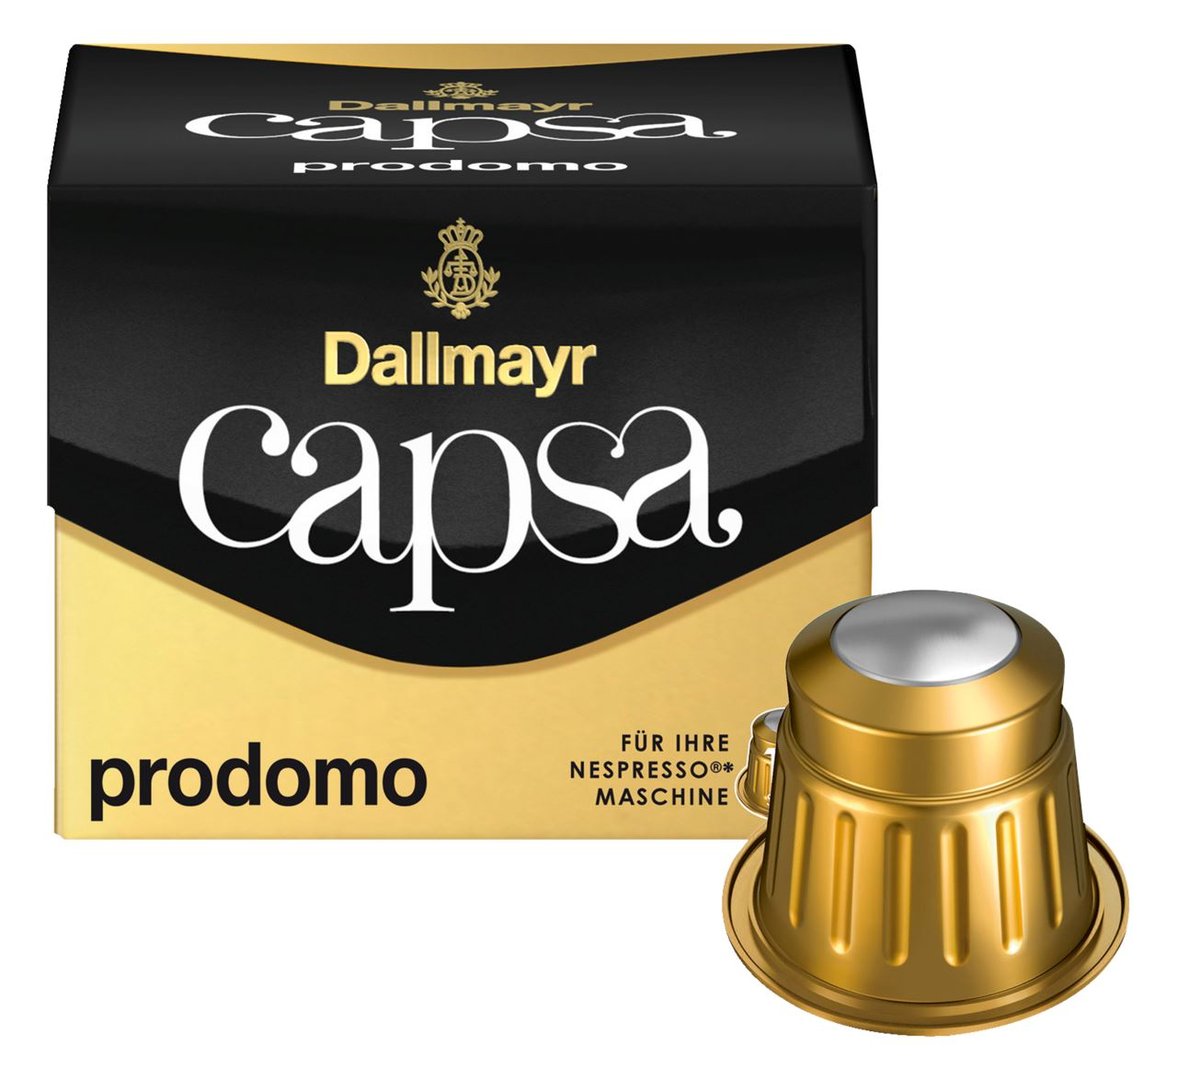 Dallmayr - Capsa Prodomo - 56 g Paket